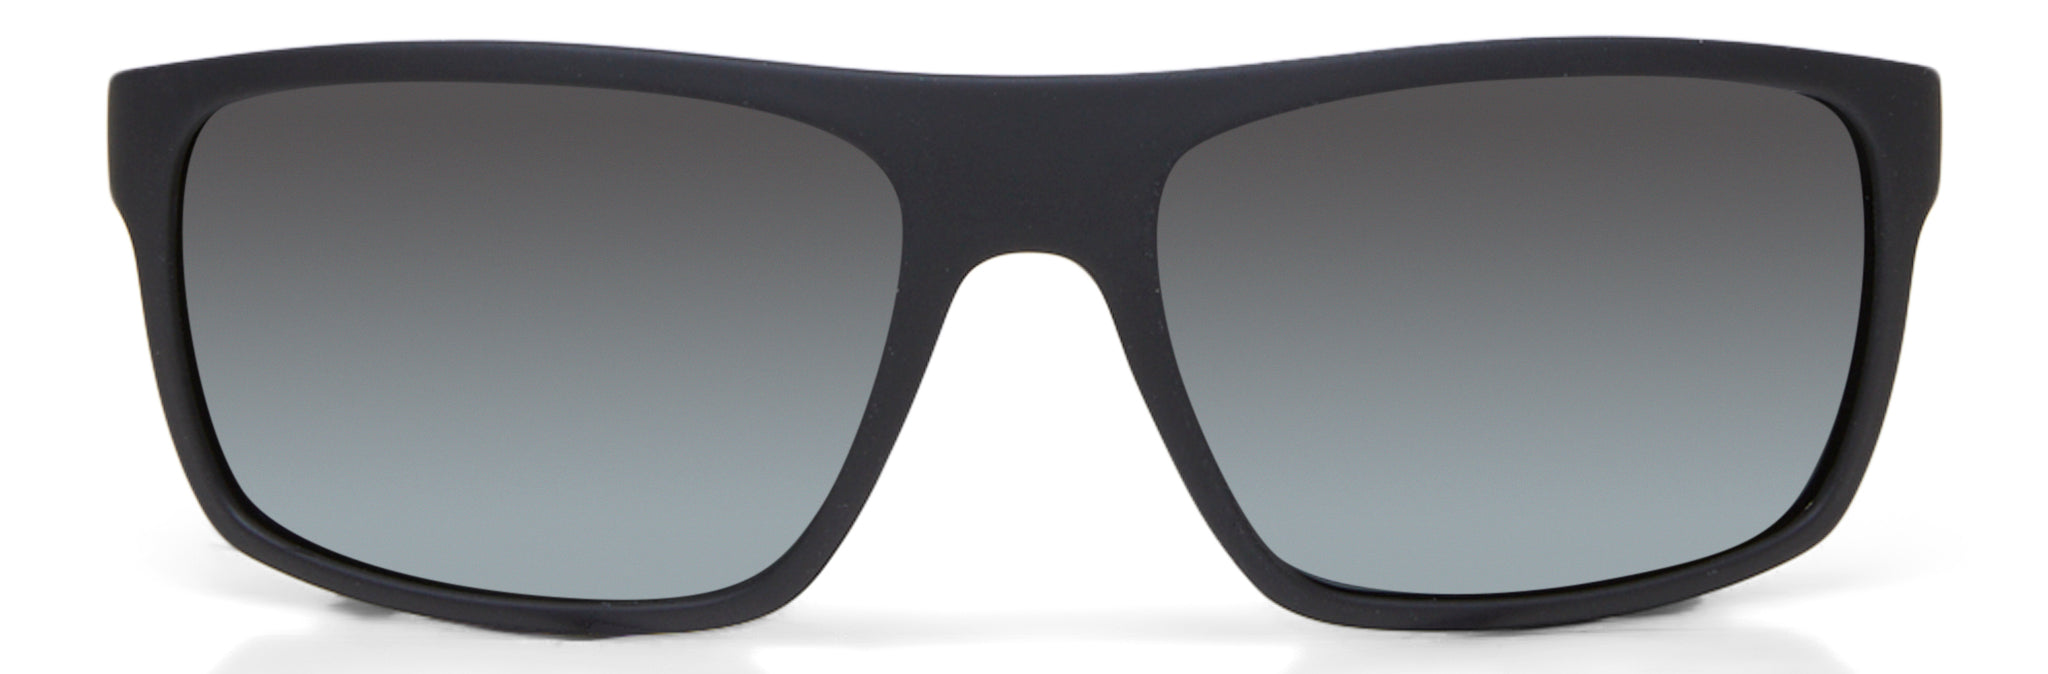 Maui Jim Byron Bay 746 Unisex Sunglasses - Black Polarized